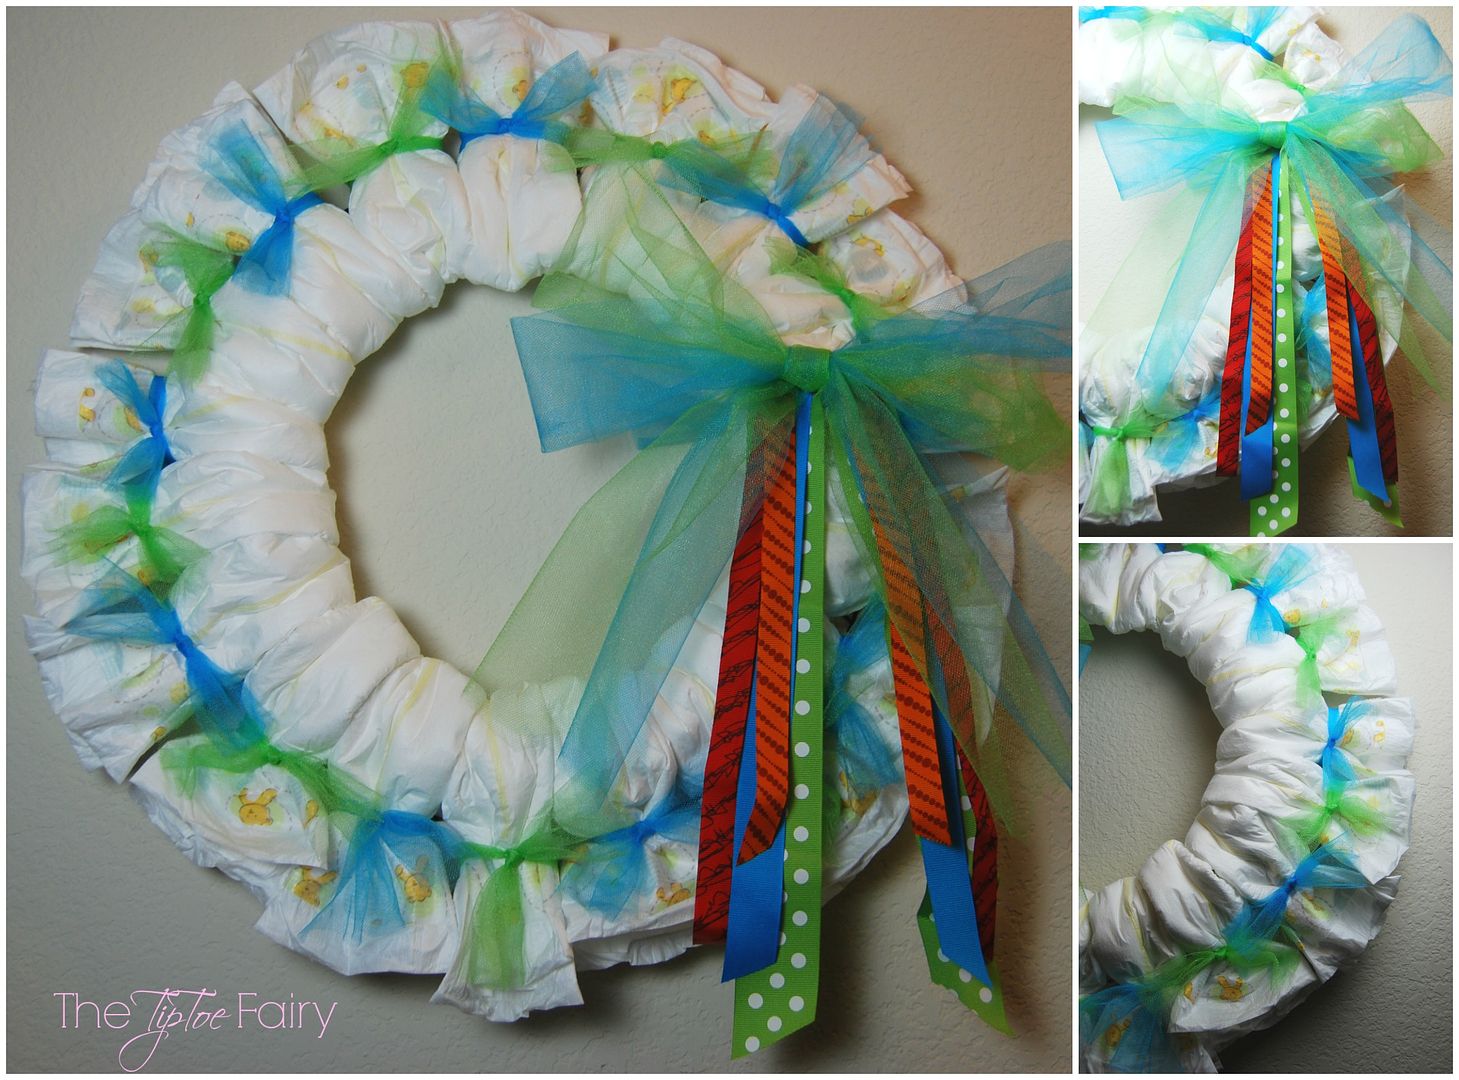 Baby Diapers Wreath Tutorial | The TipToe Fairy #BabyDiapersSavings #CollectiveBias #shop #diaperwreath #babygift #tutorial